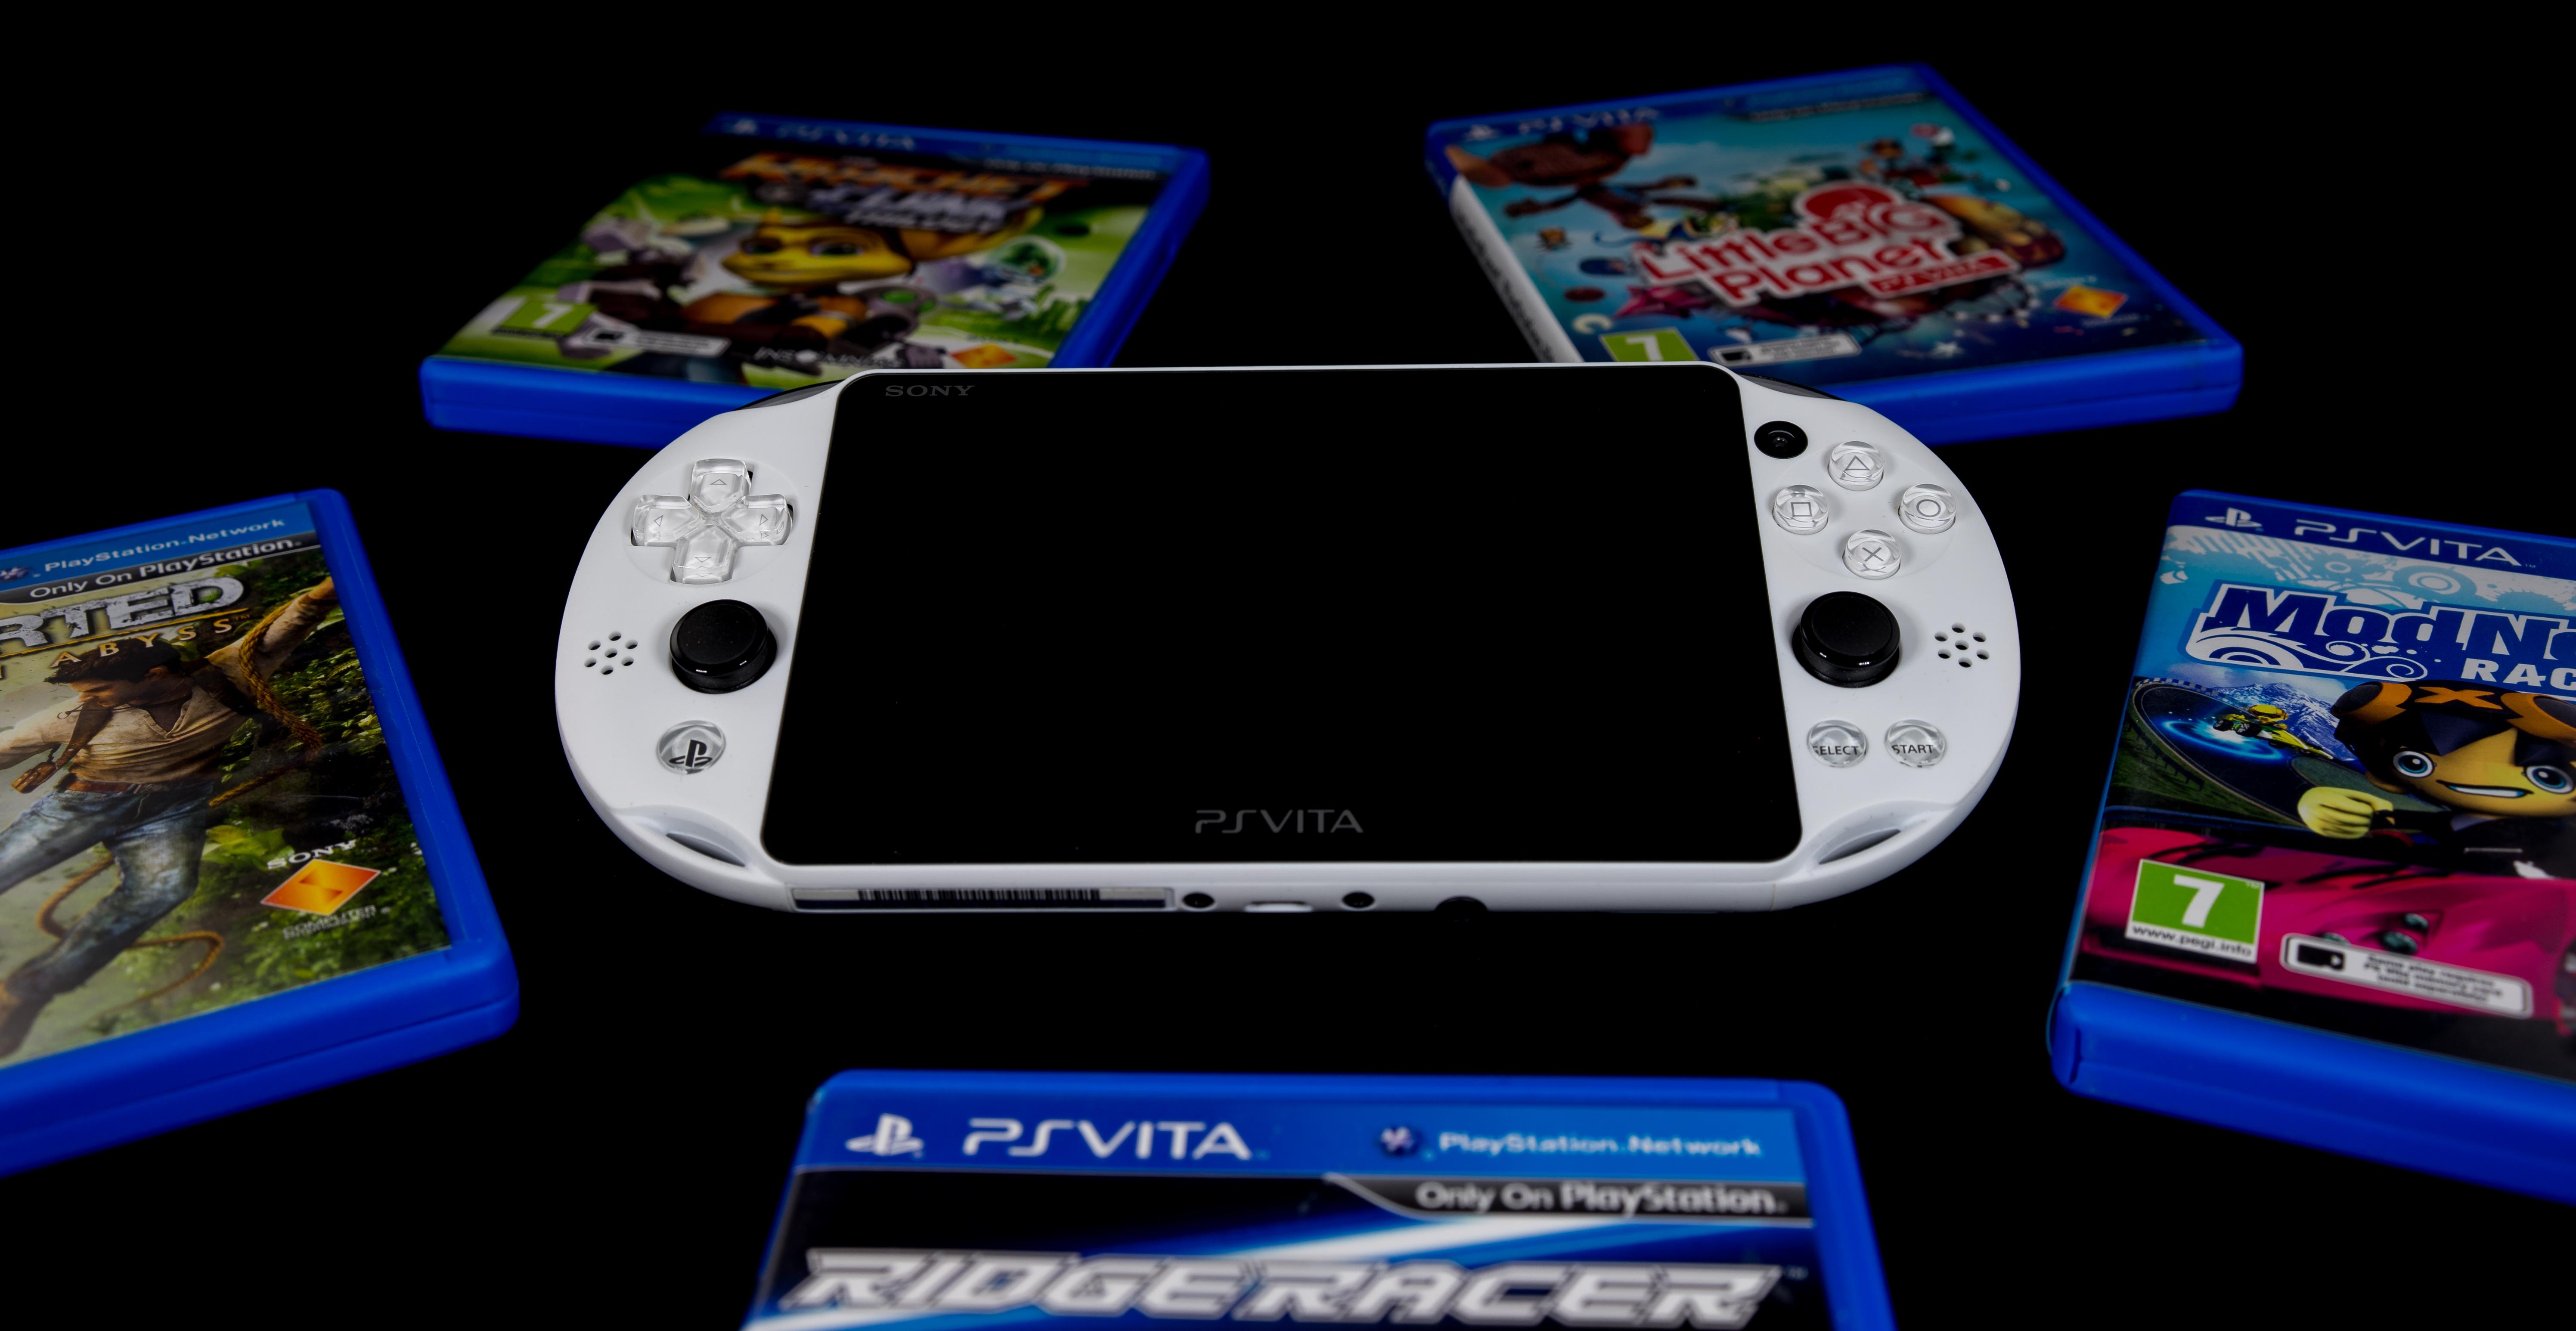 PS Vita2｣が開発中？ 携帯できるプレステに後継機のうわさ 